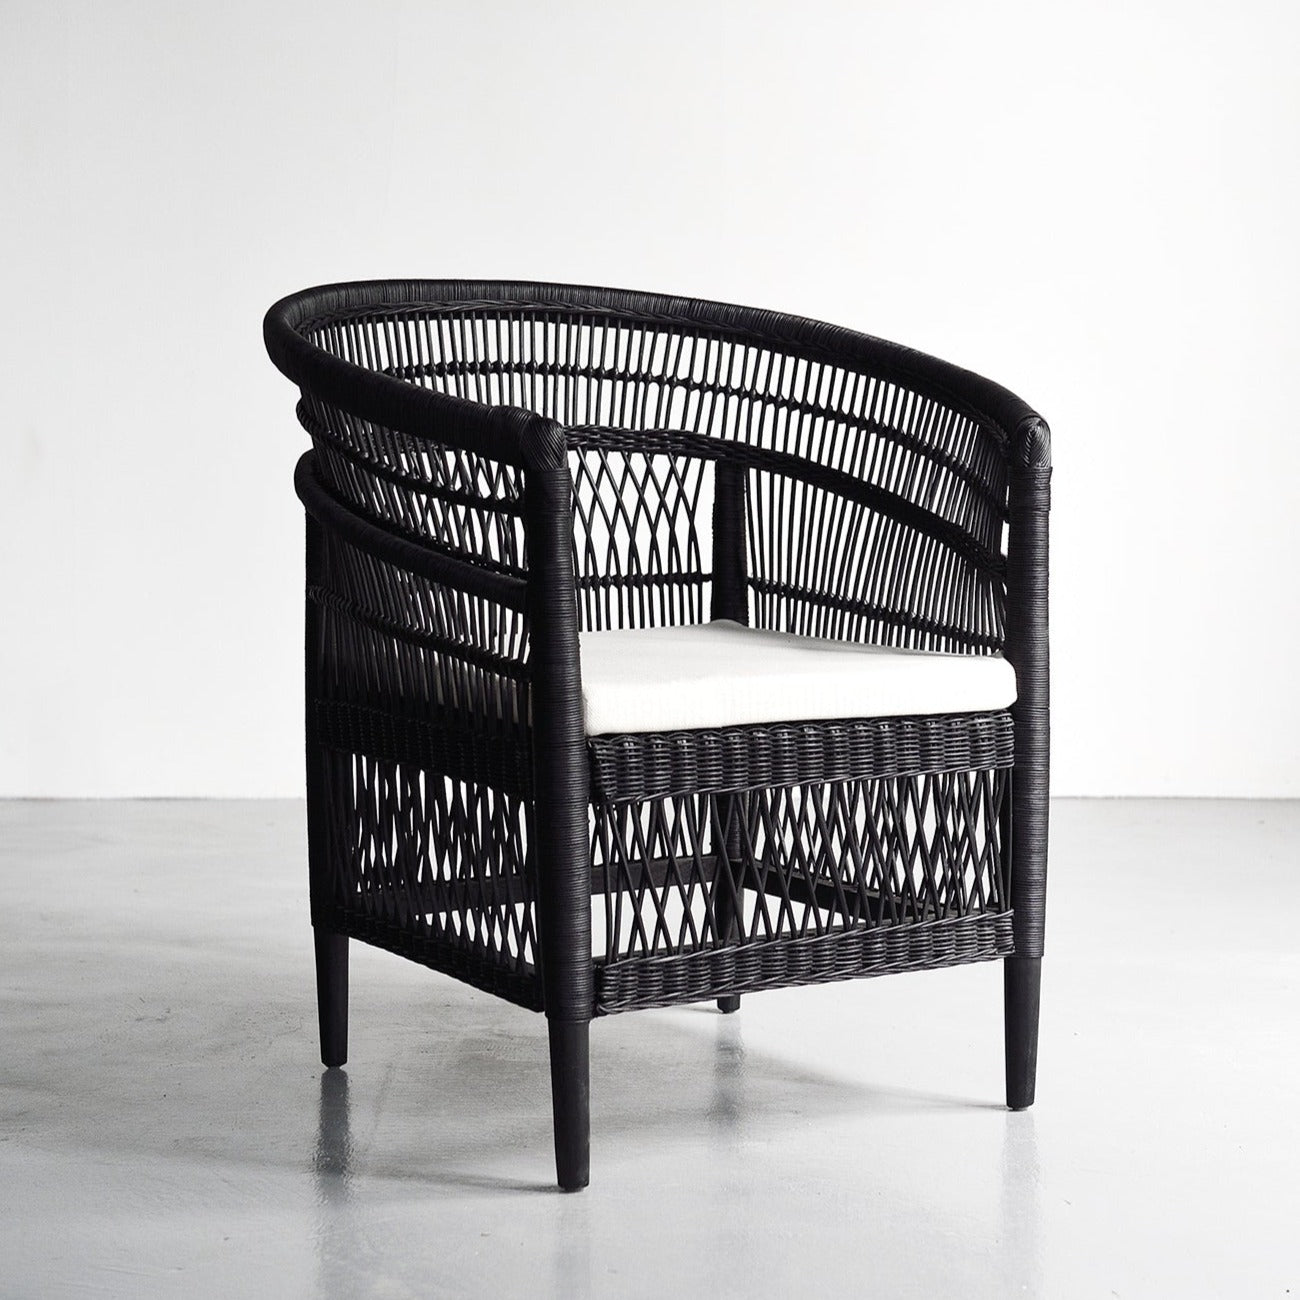 Malawi Arm Chair - Black - Furniture